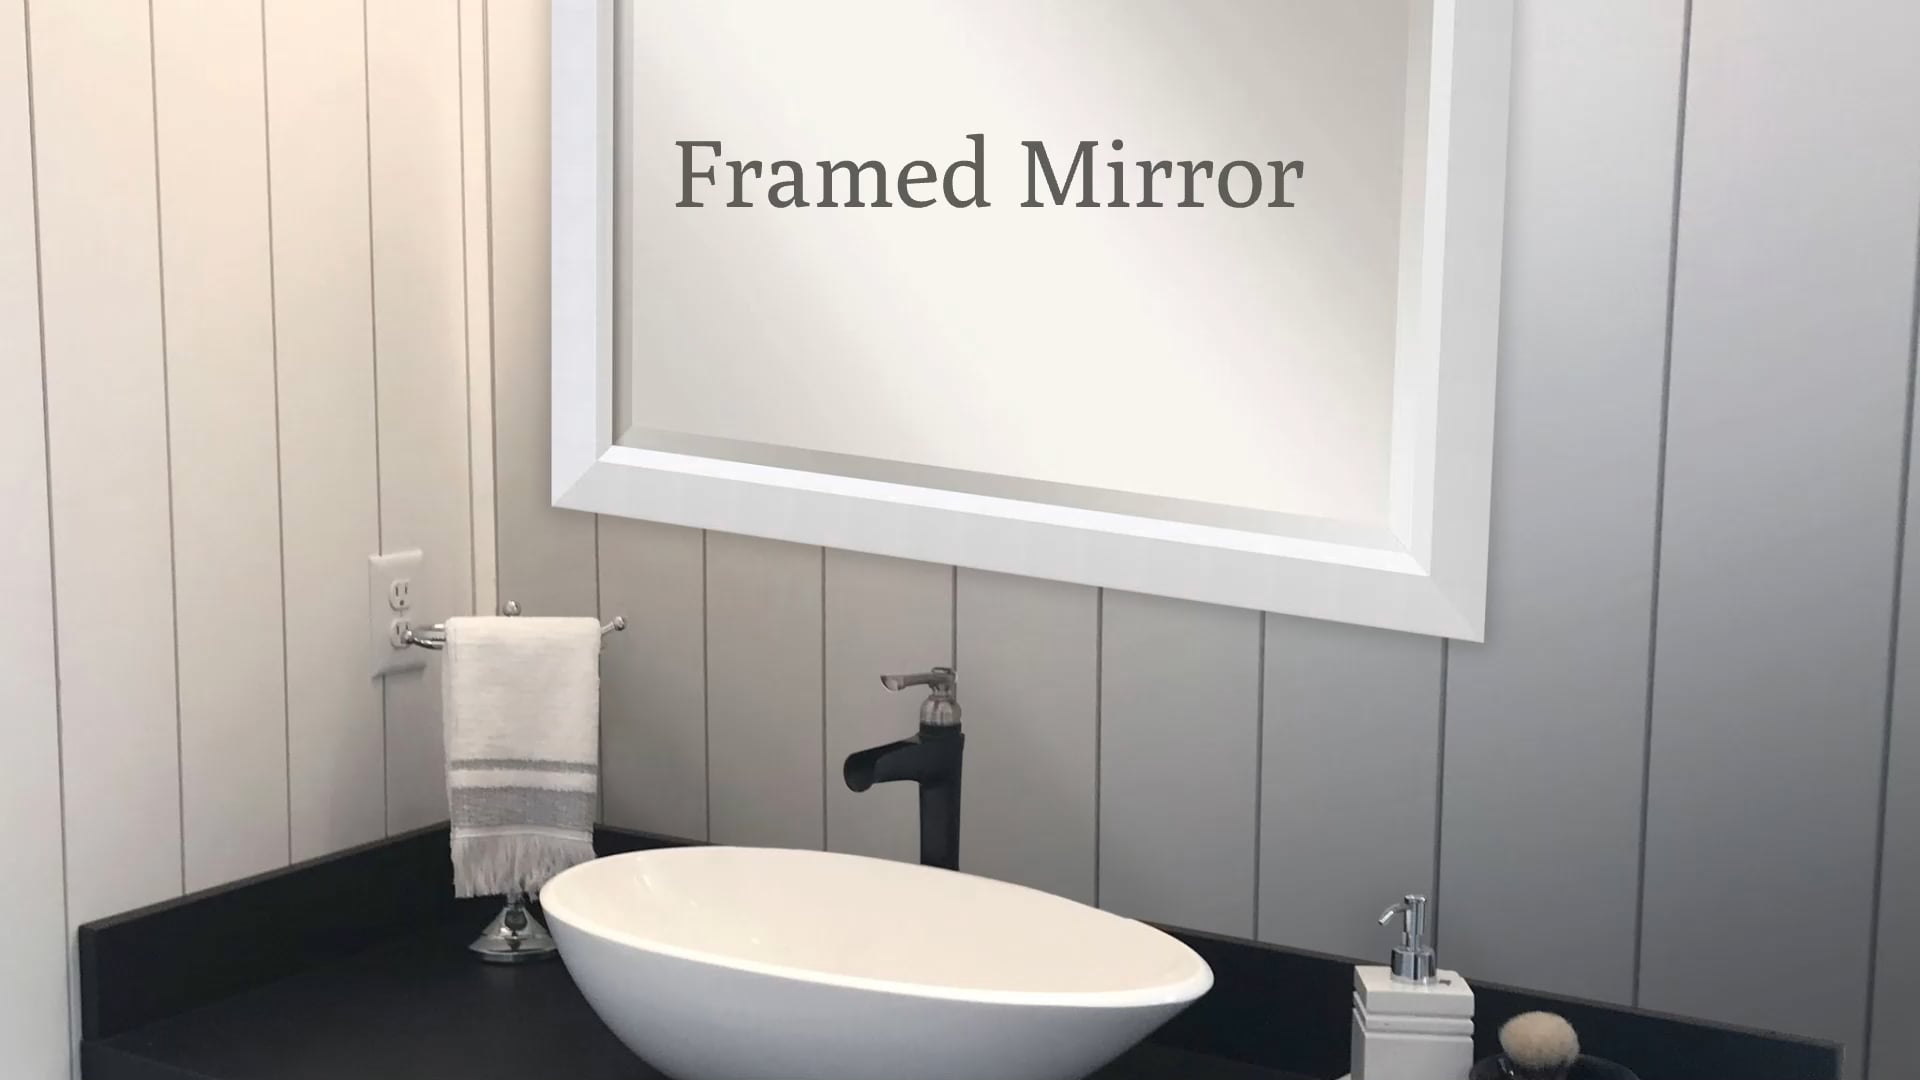 Parisian Silver Beveled Wood Bathroom Wall Mirror - 30 x 24 in.